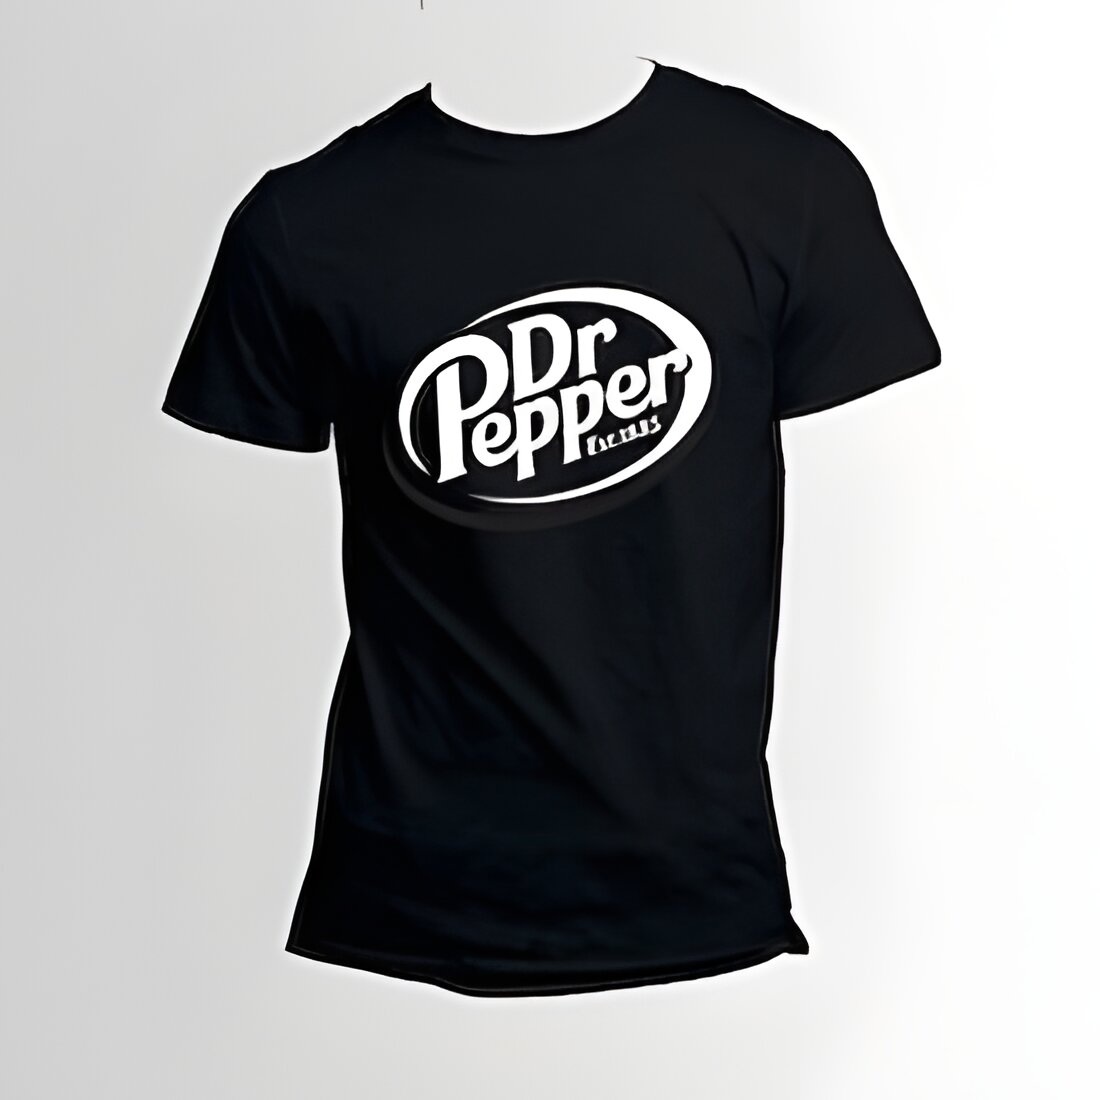 Free Dr. Pepper T-Shirt